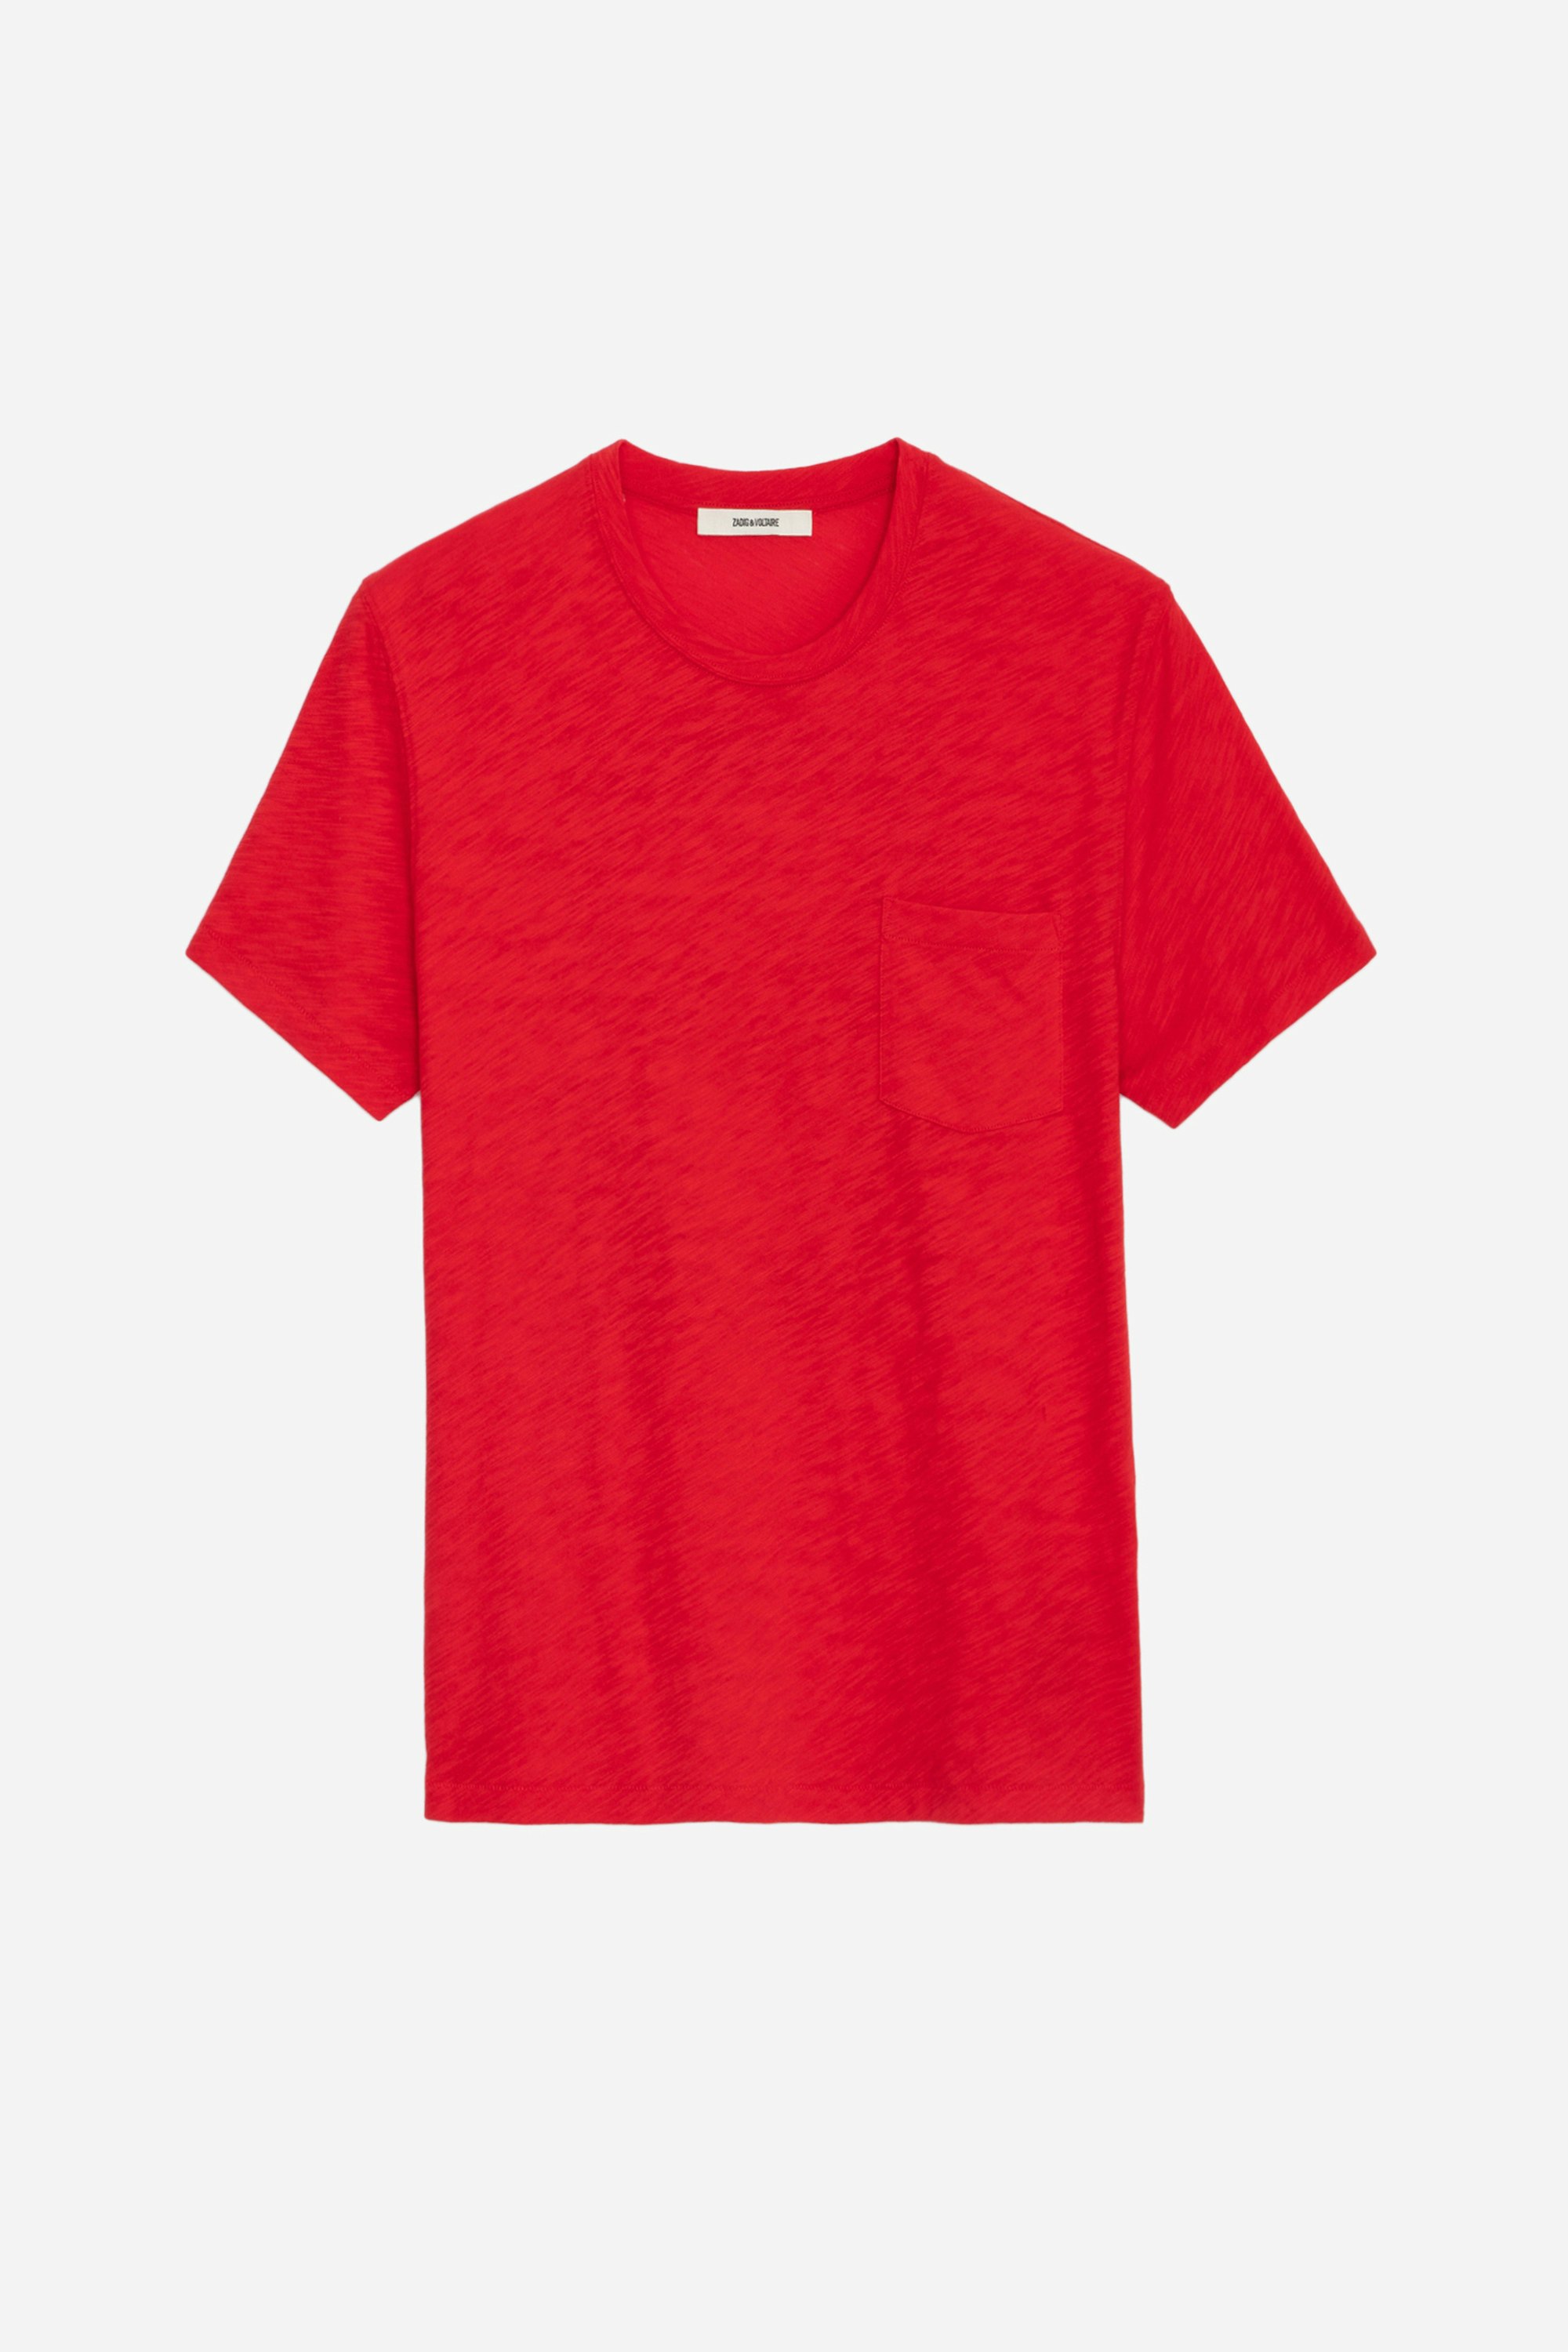 Stockholm Slub T-shirt - Men’s red slub cotton T-shirt with a chest pocket and Skull motif on the back.